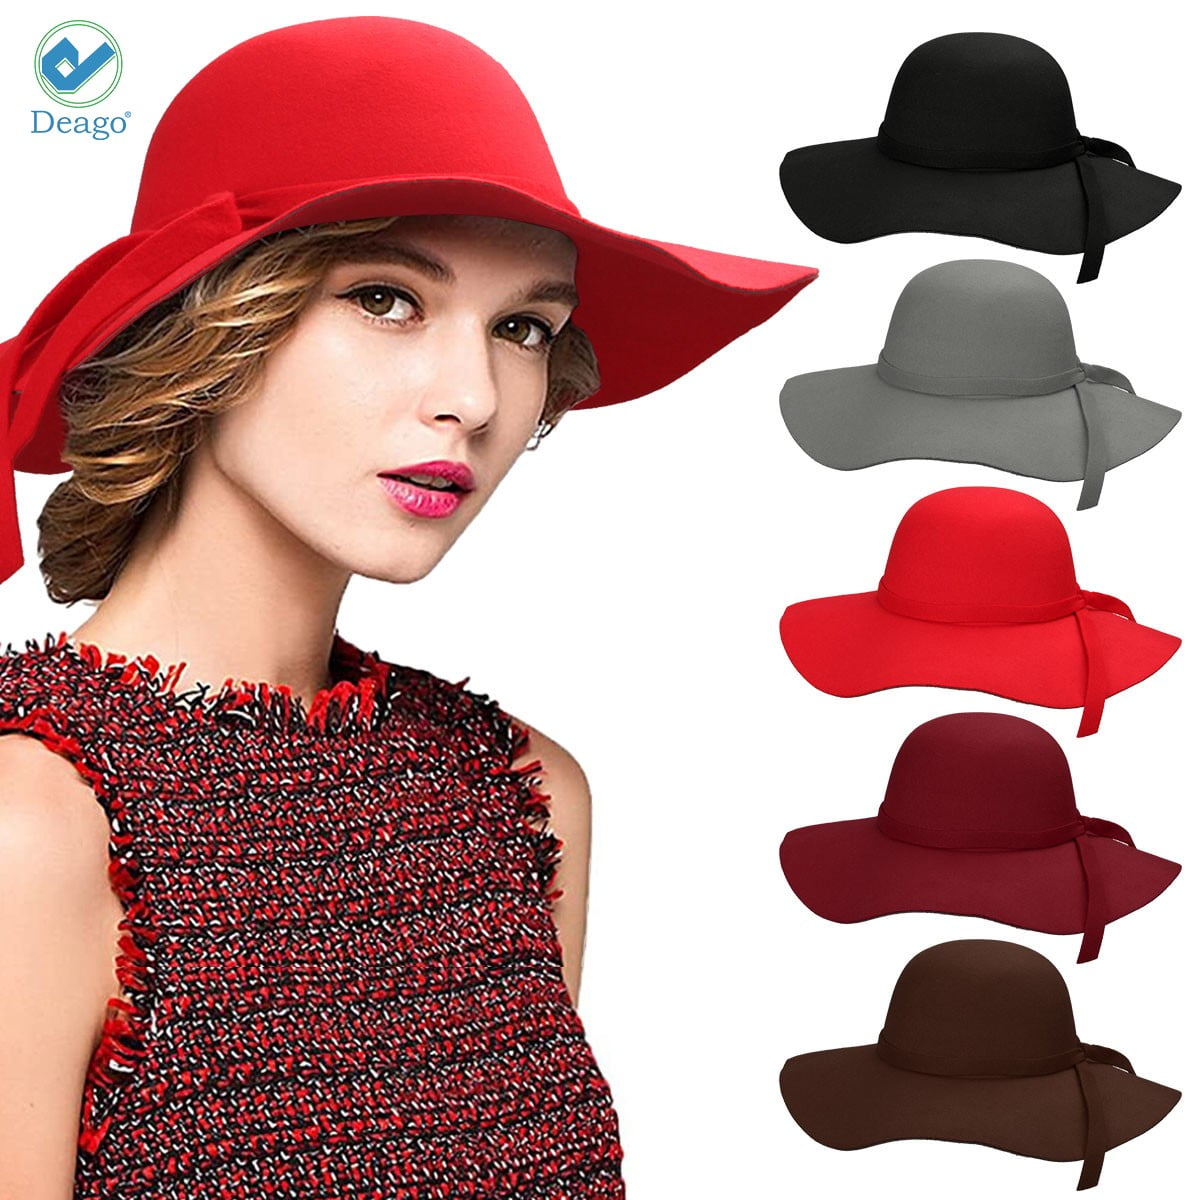 Argonv Women Vintage Wide Brim Floppy Warm Fashion Felt Hat Trilby Bowler 6 Colors 